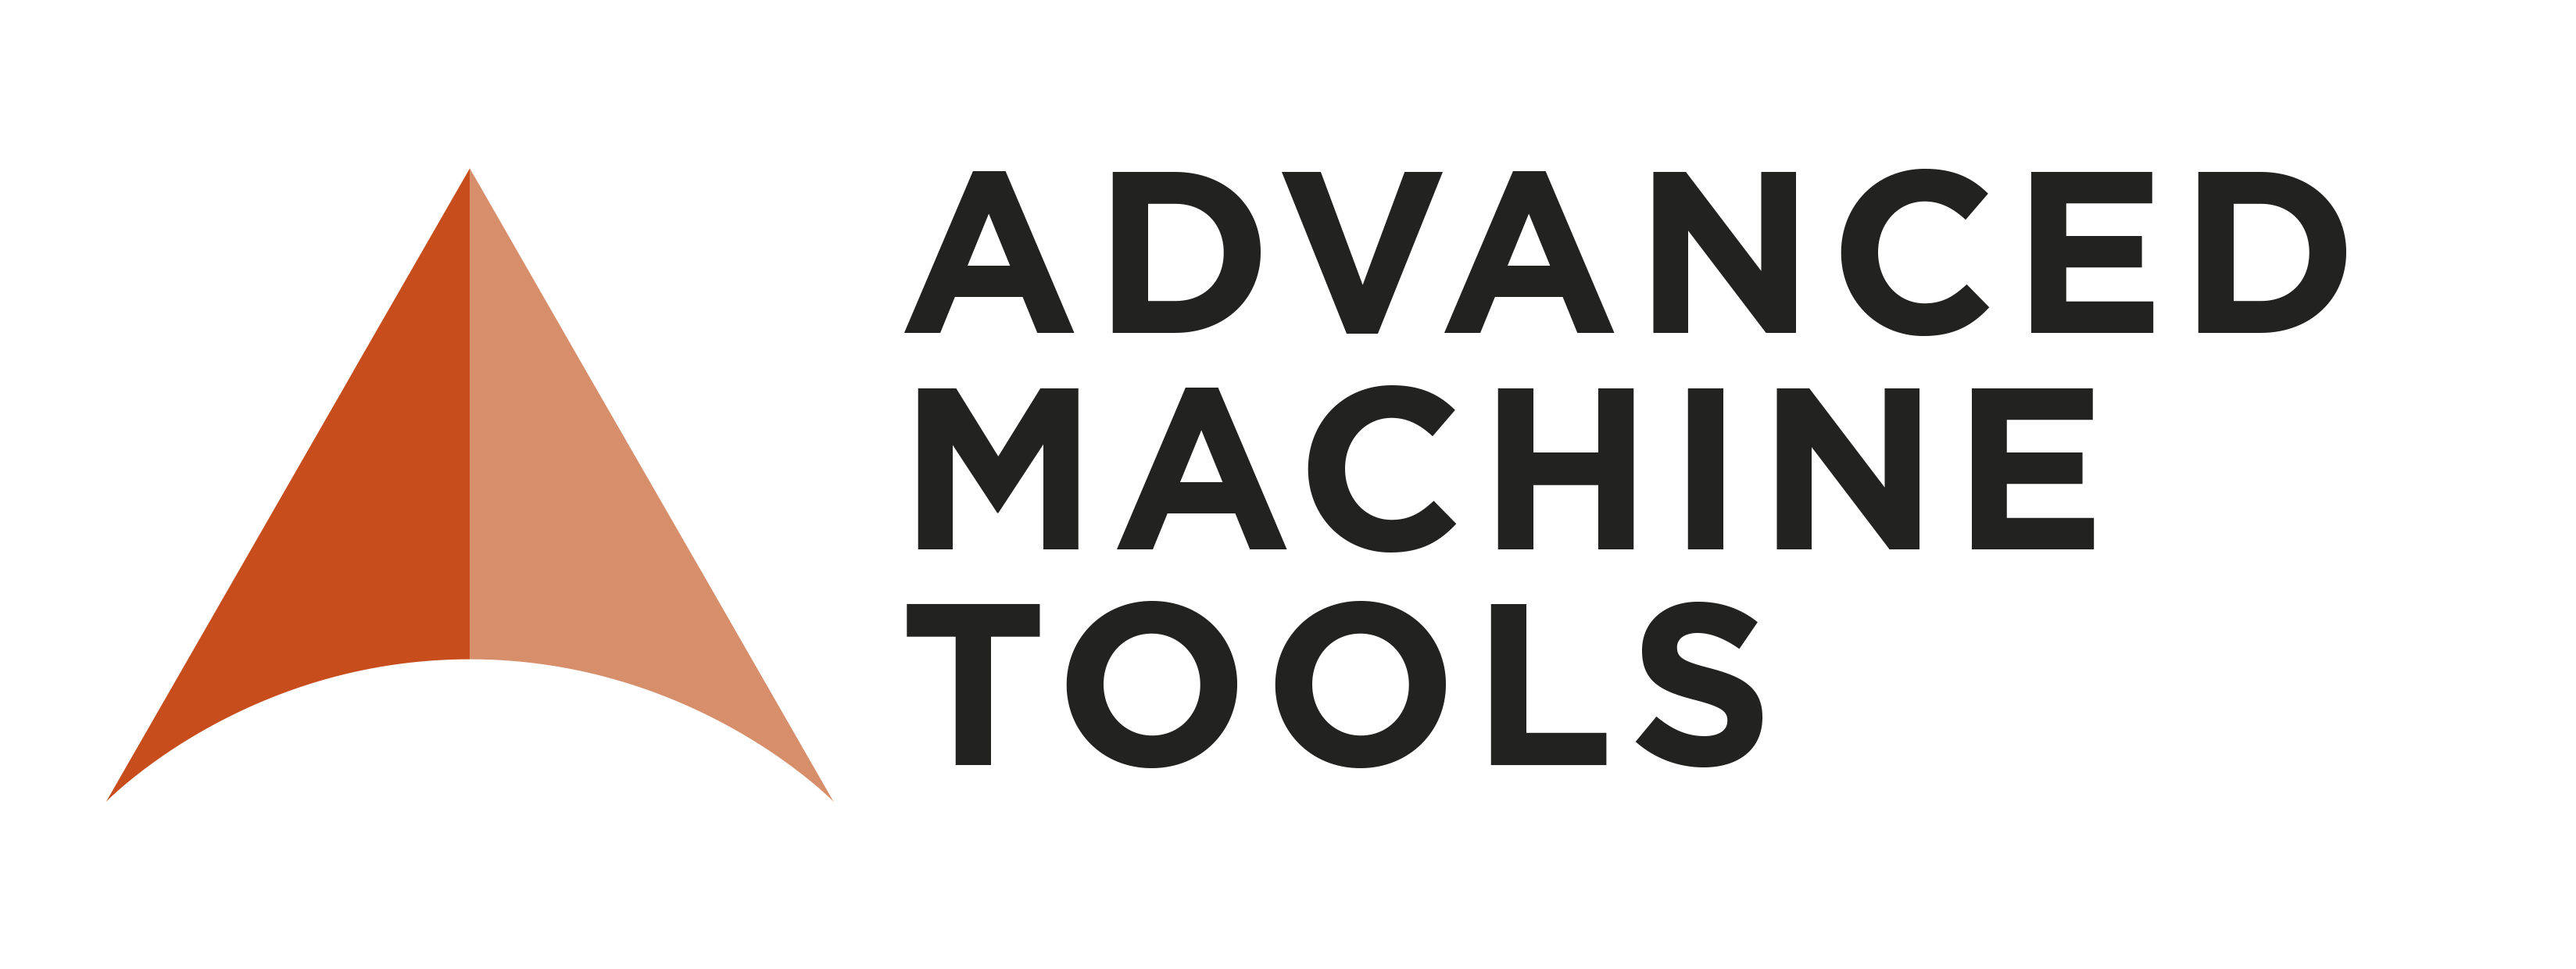 Advanced Machine Tools